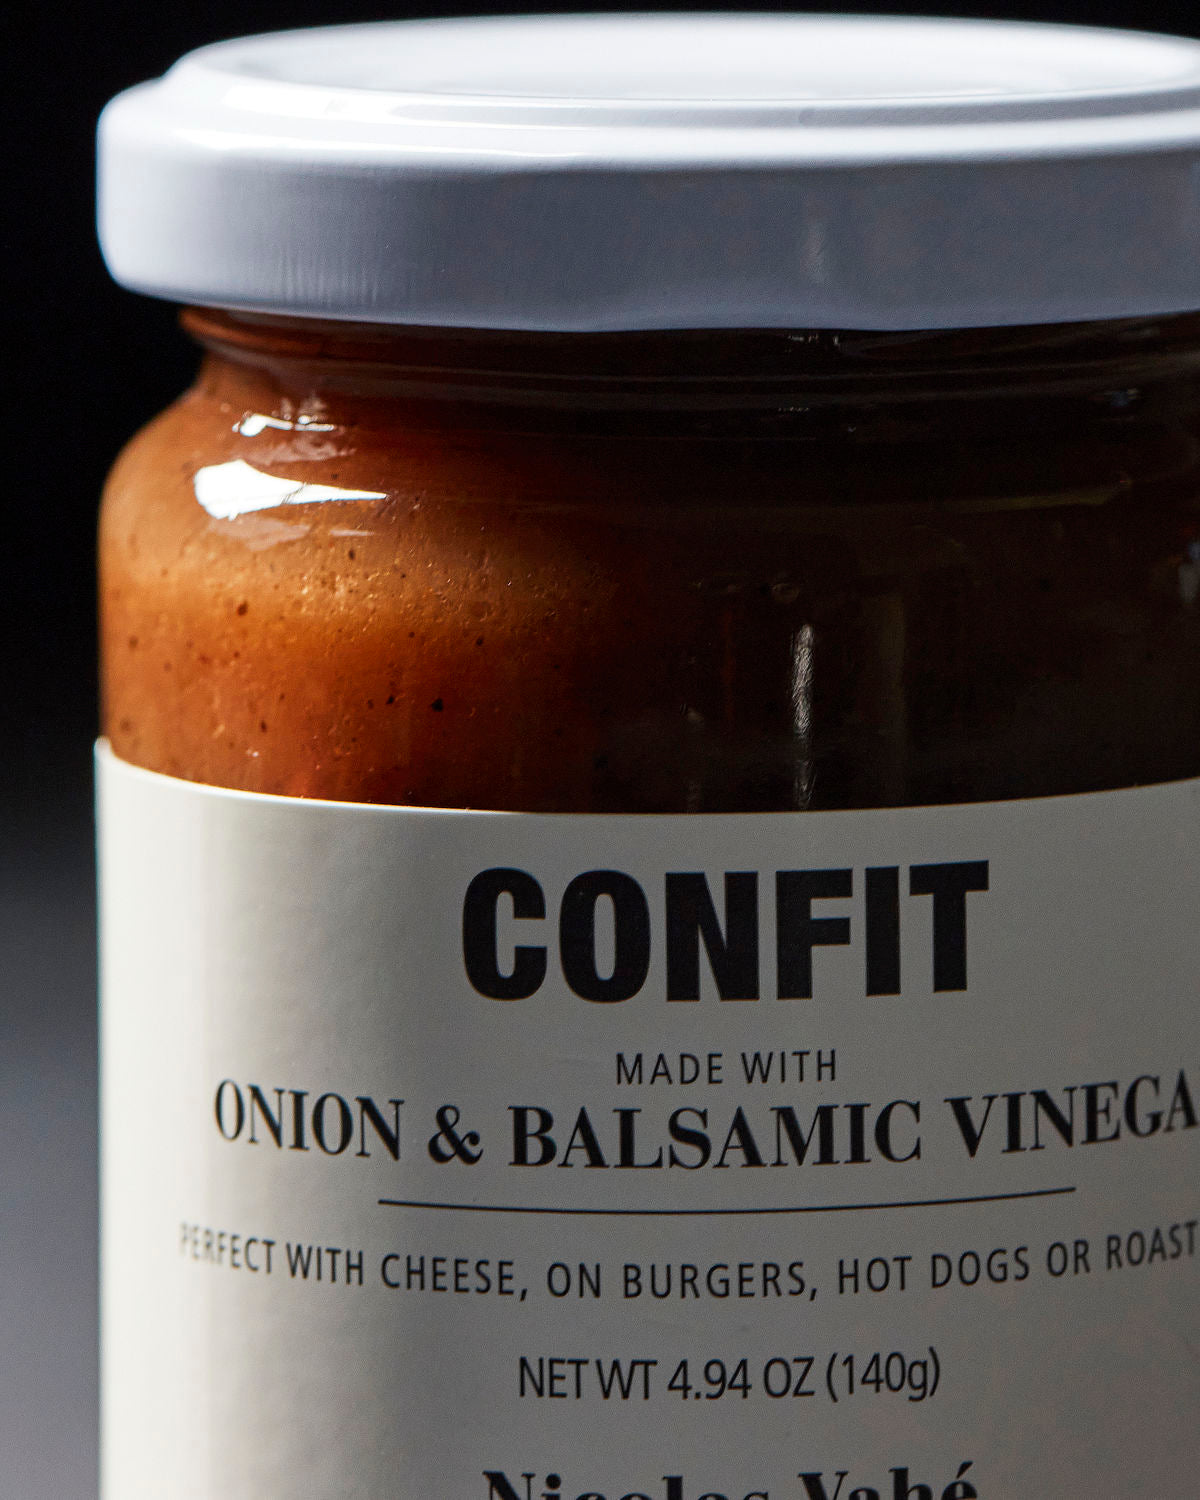 Confit, Onion & balsamic vinega